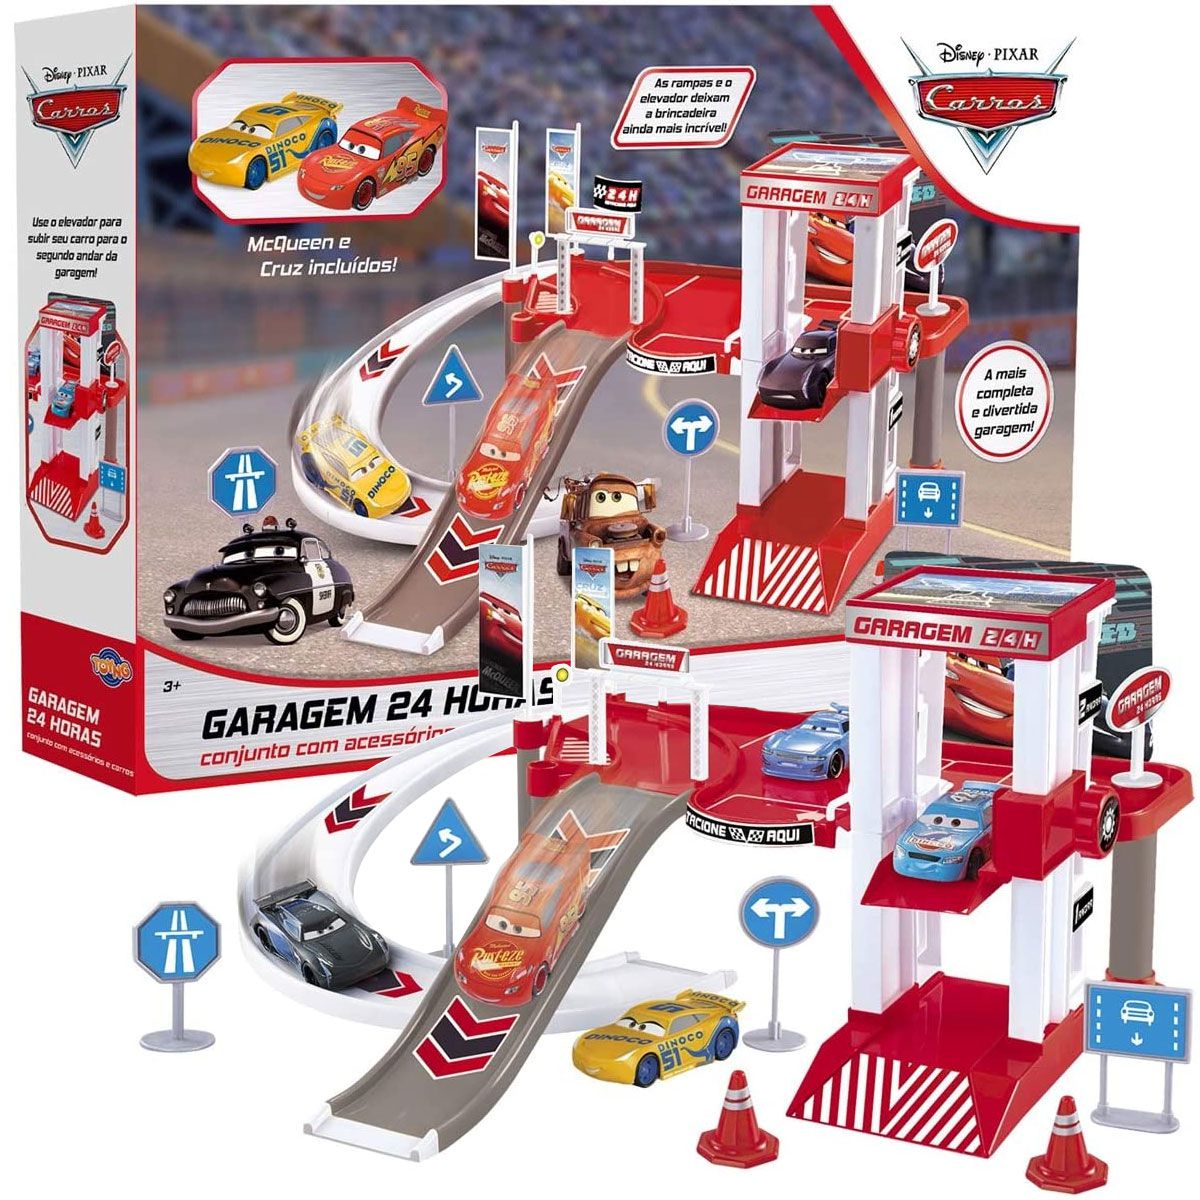 Comprar Carros, pistas e garagens online. Loja online de Brinquedos